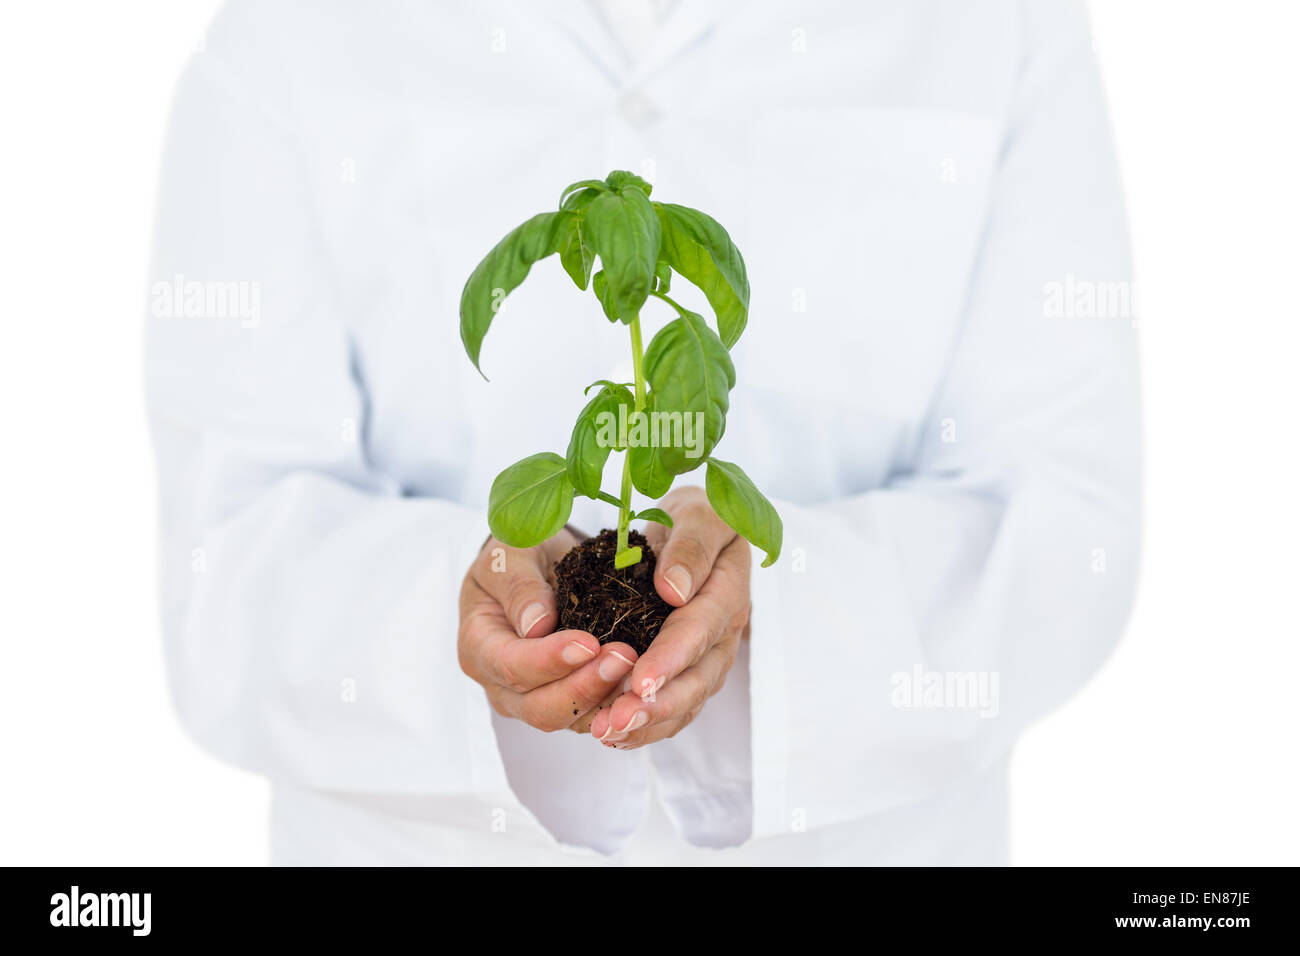 Scientist holding basil plant Stock Photo